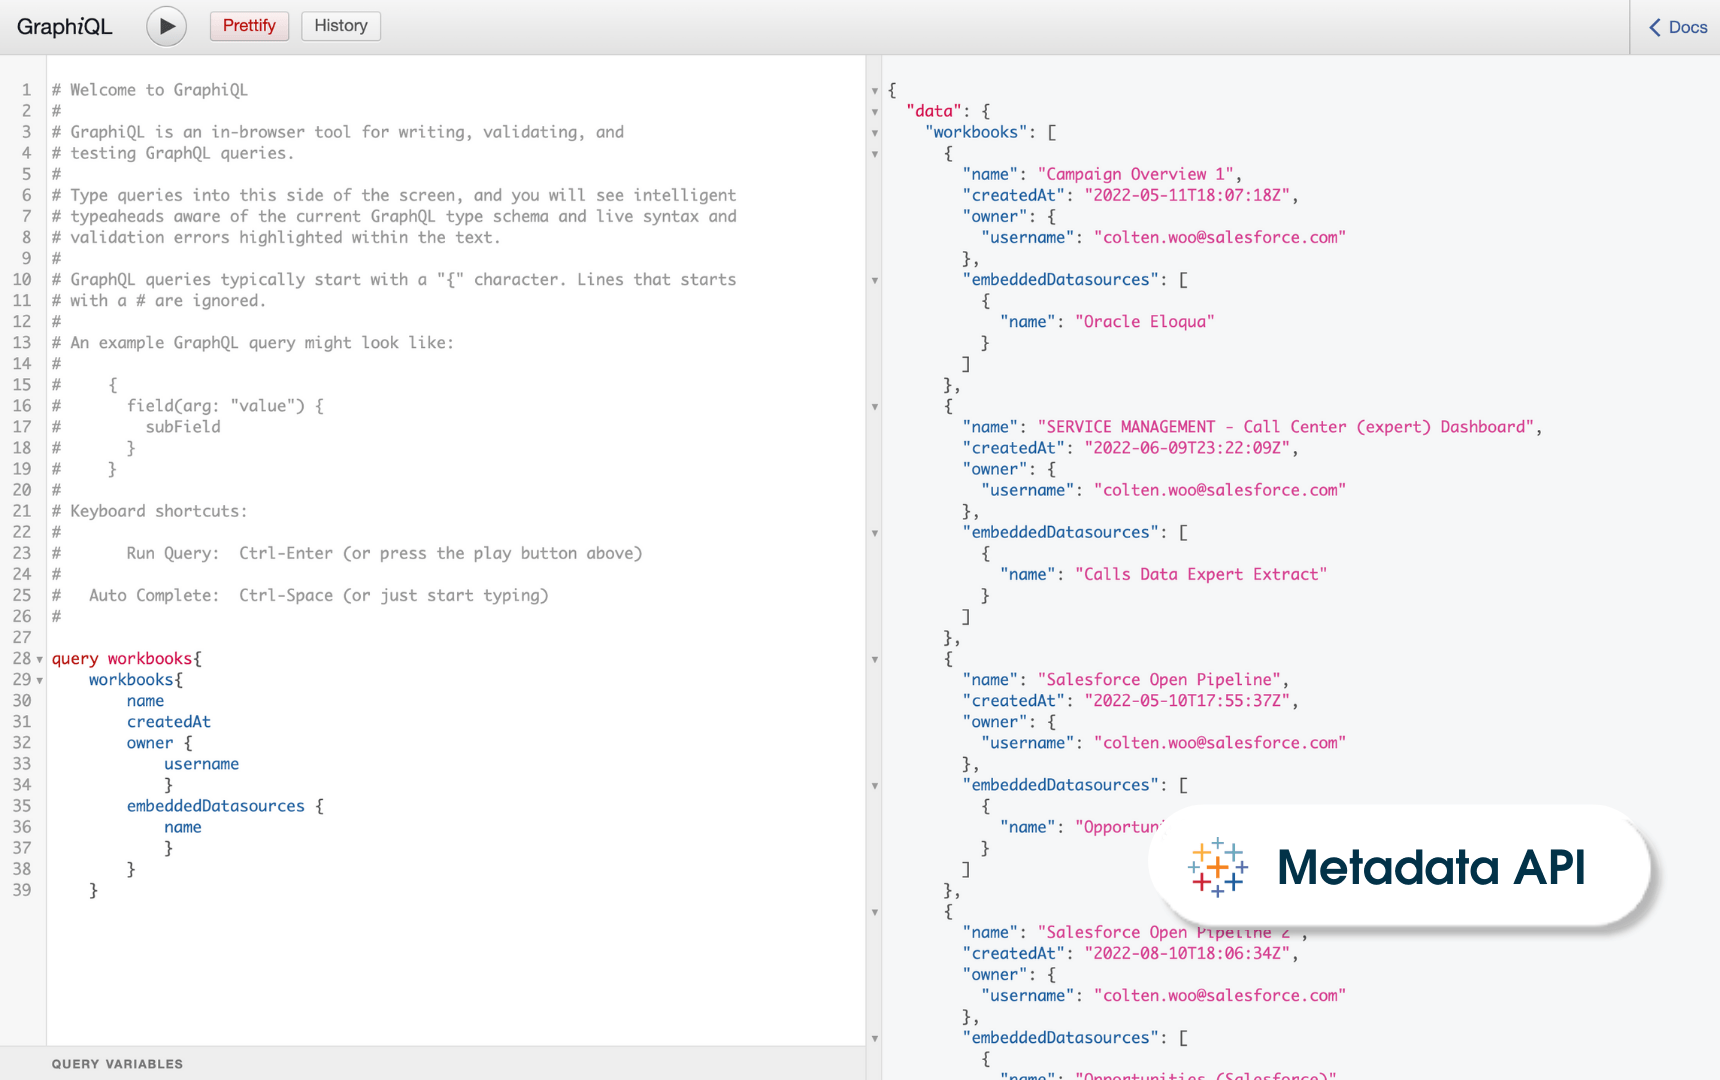 Metadata API